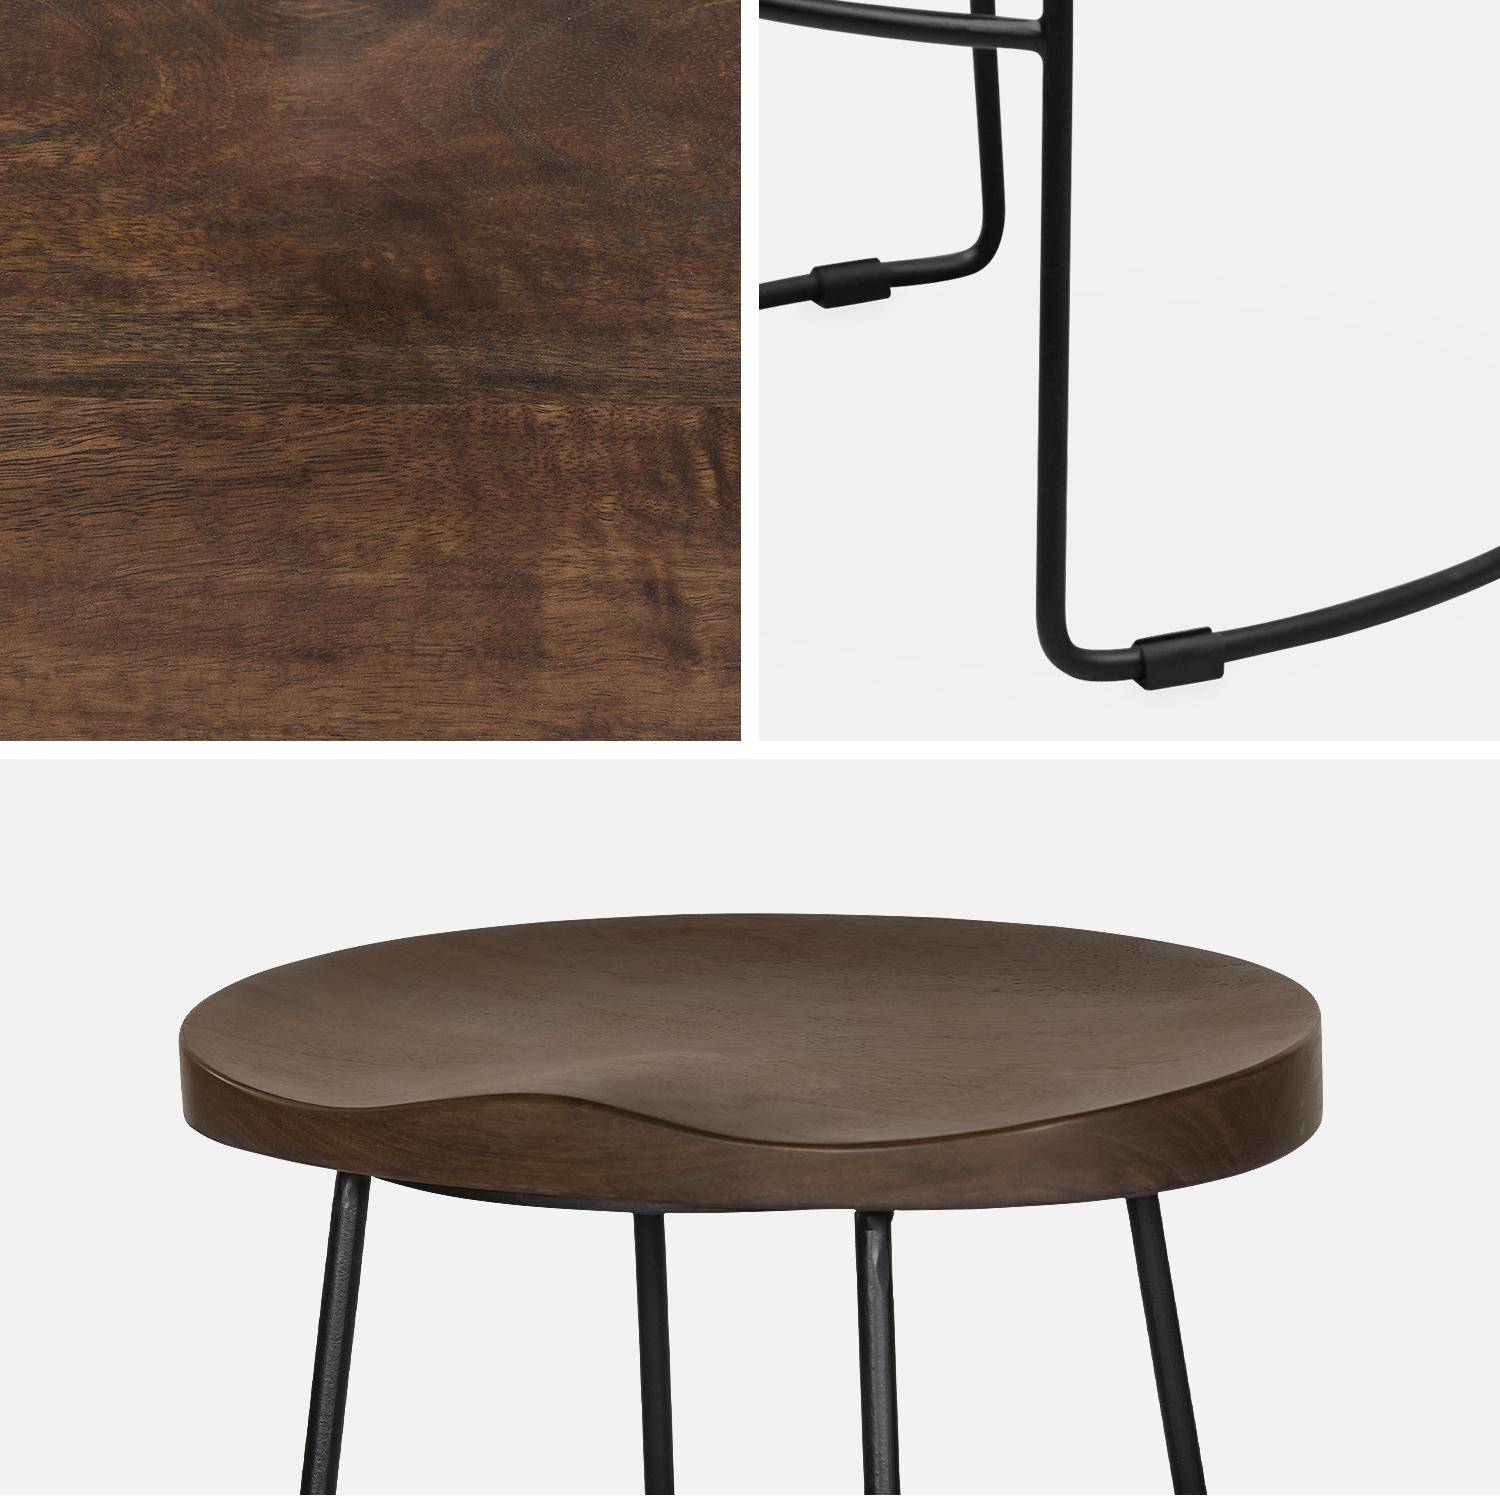 Set of 4 industrial metal and wooden bar stools, 44x36x65cm, Jaya, Light Walnut, Mango wood seat, black metal legs Photo8